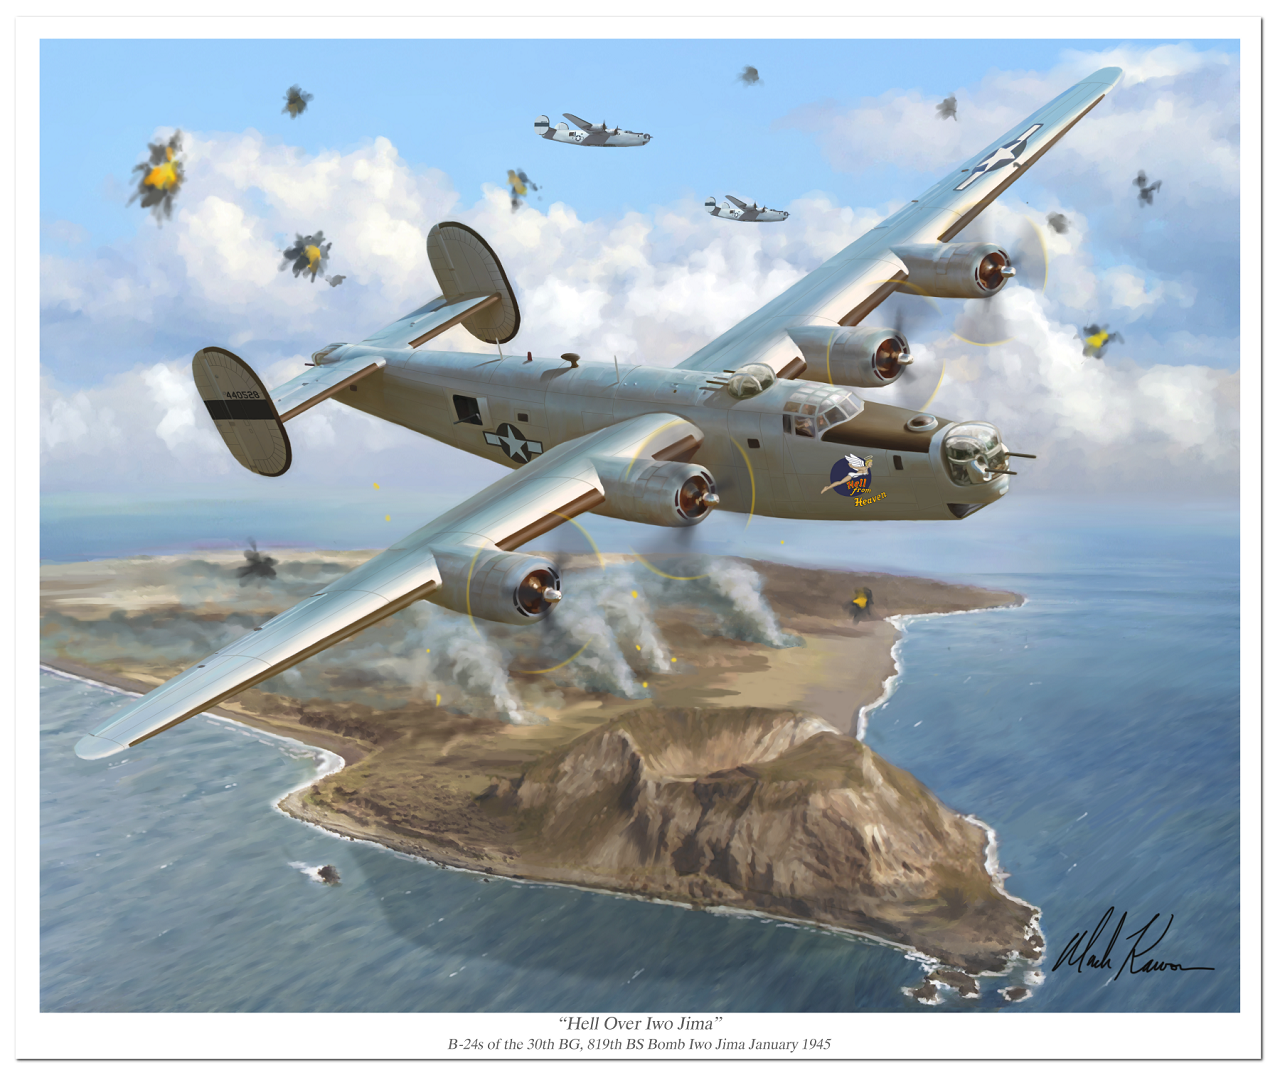 "Hell over Iwo Jima" by Mark Karvon featuring the USAAF B-24 Liberator